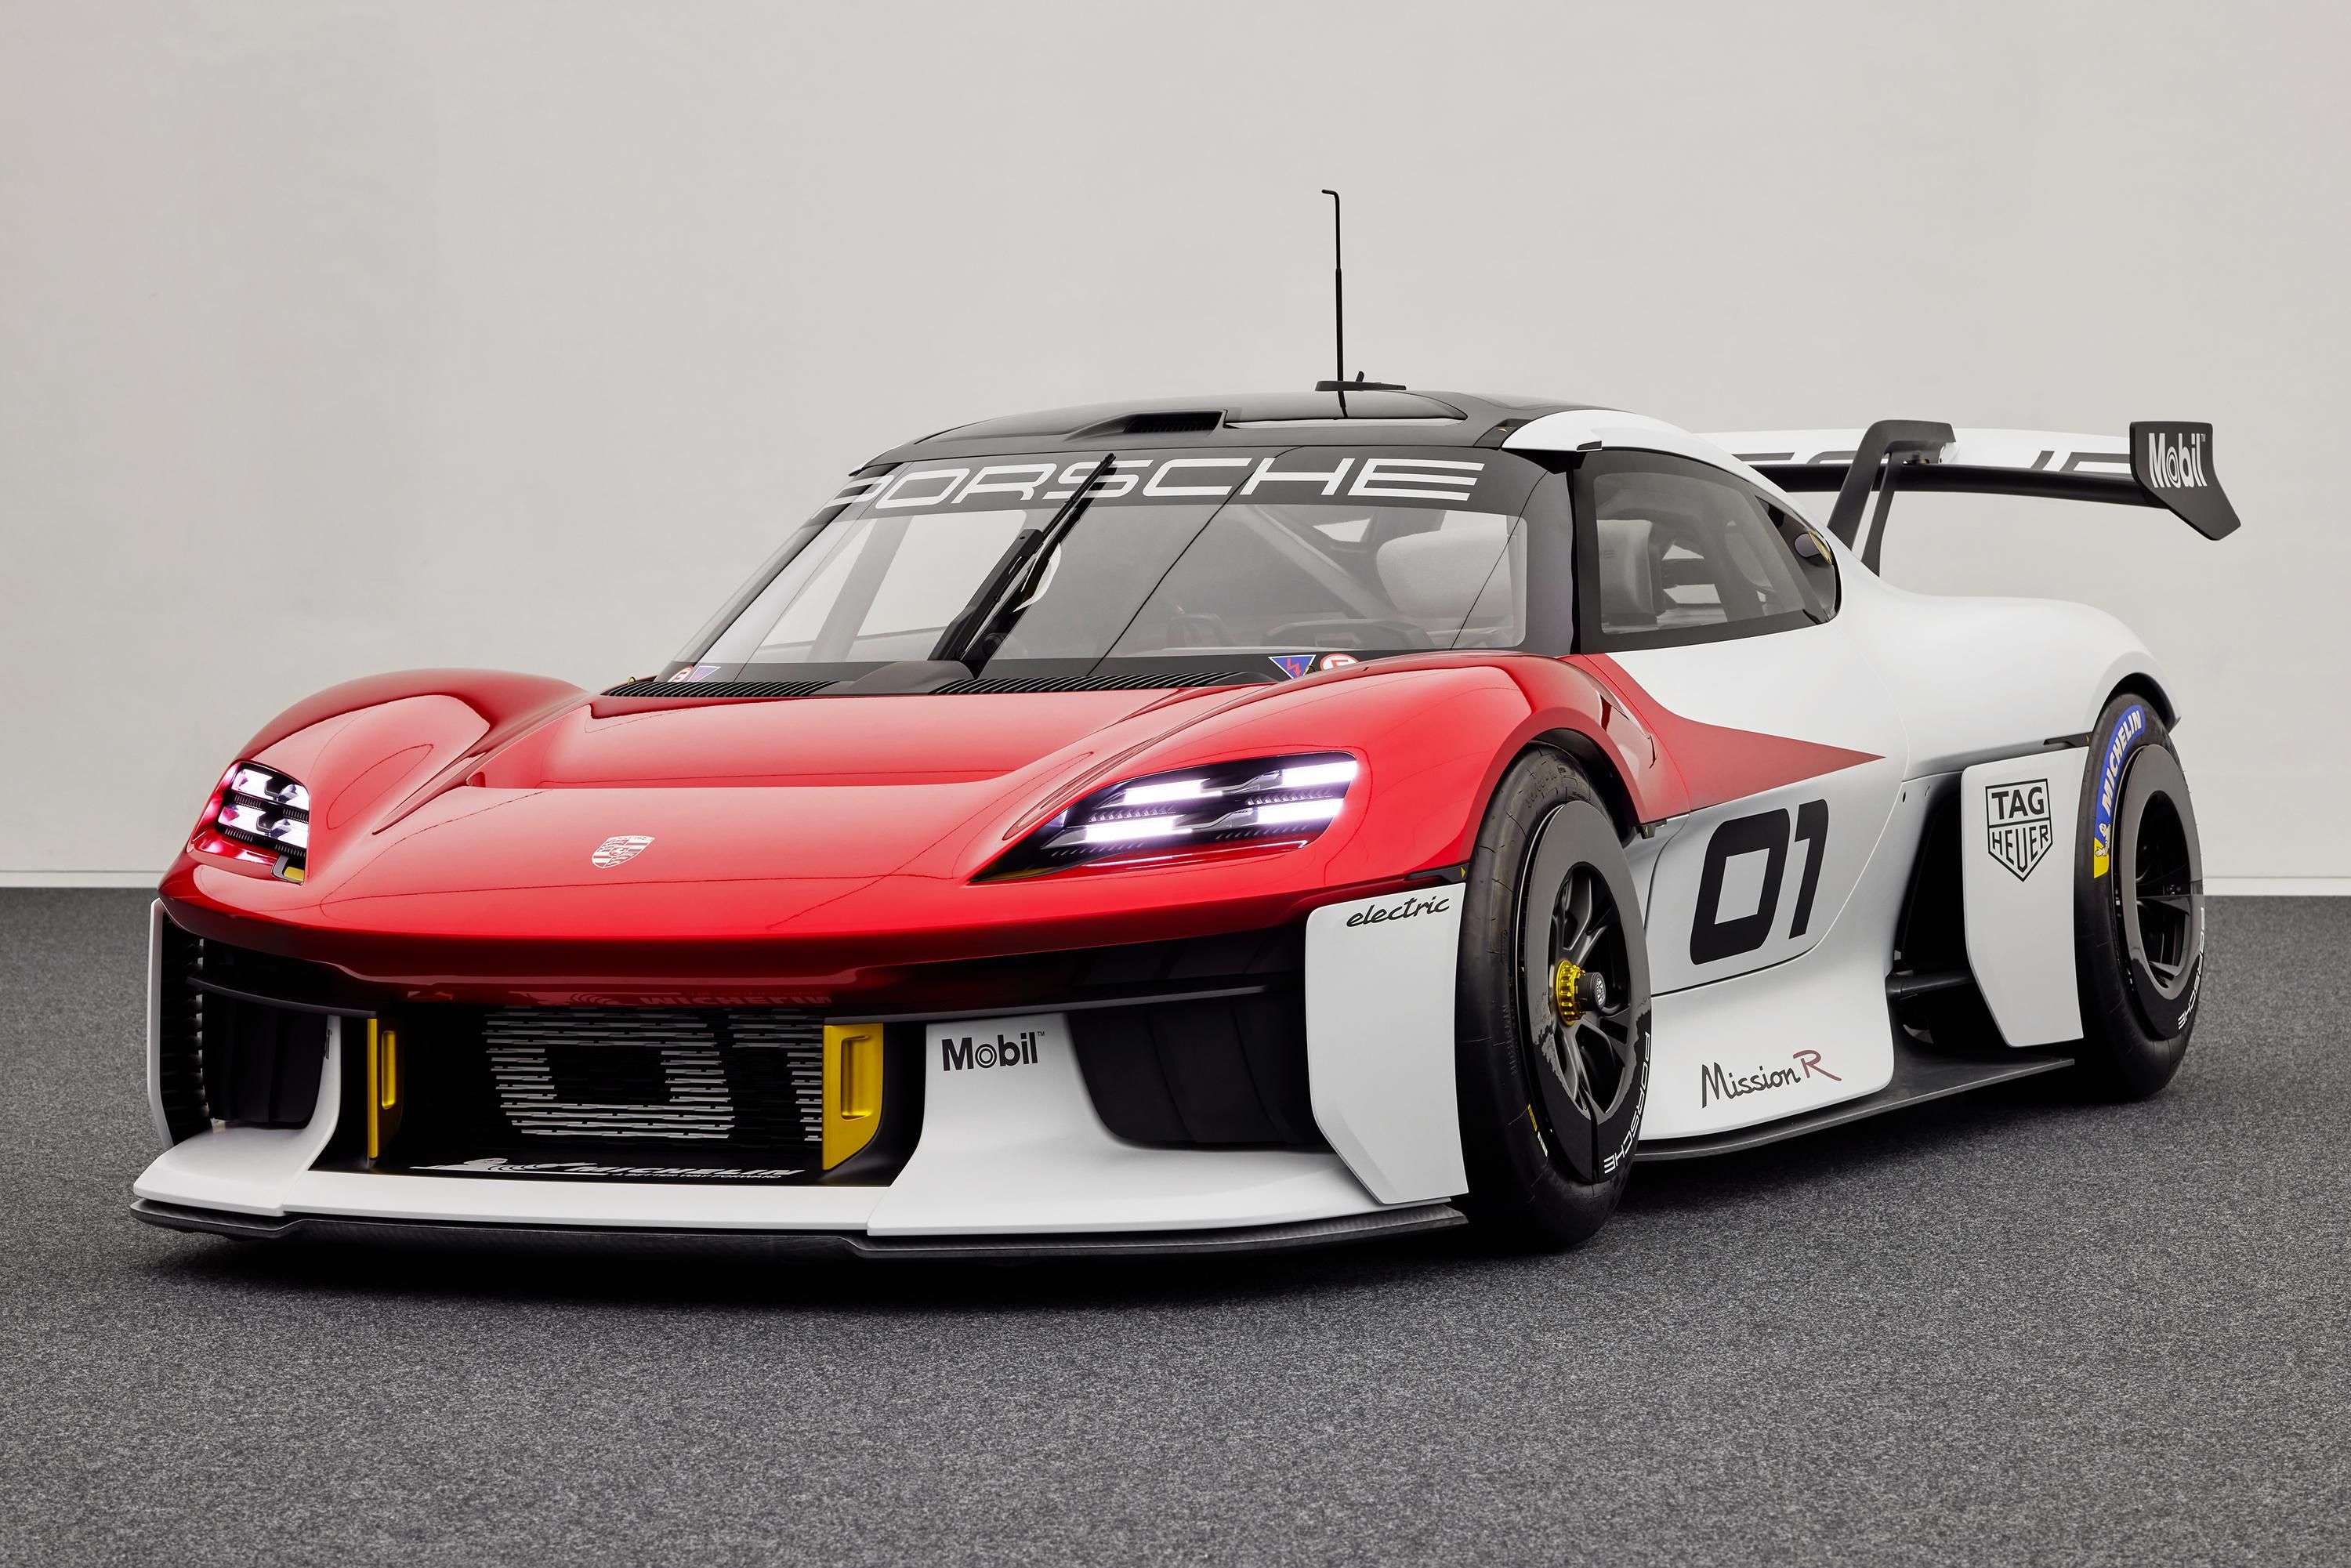 2021 2024: The Year Porsche Electrifies the Sports Car Segment